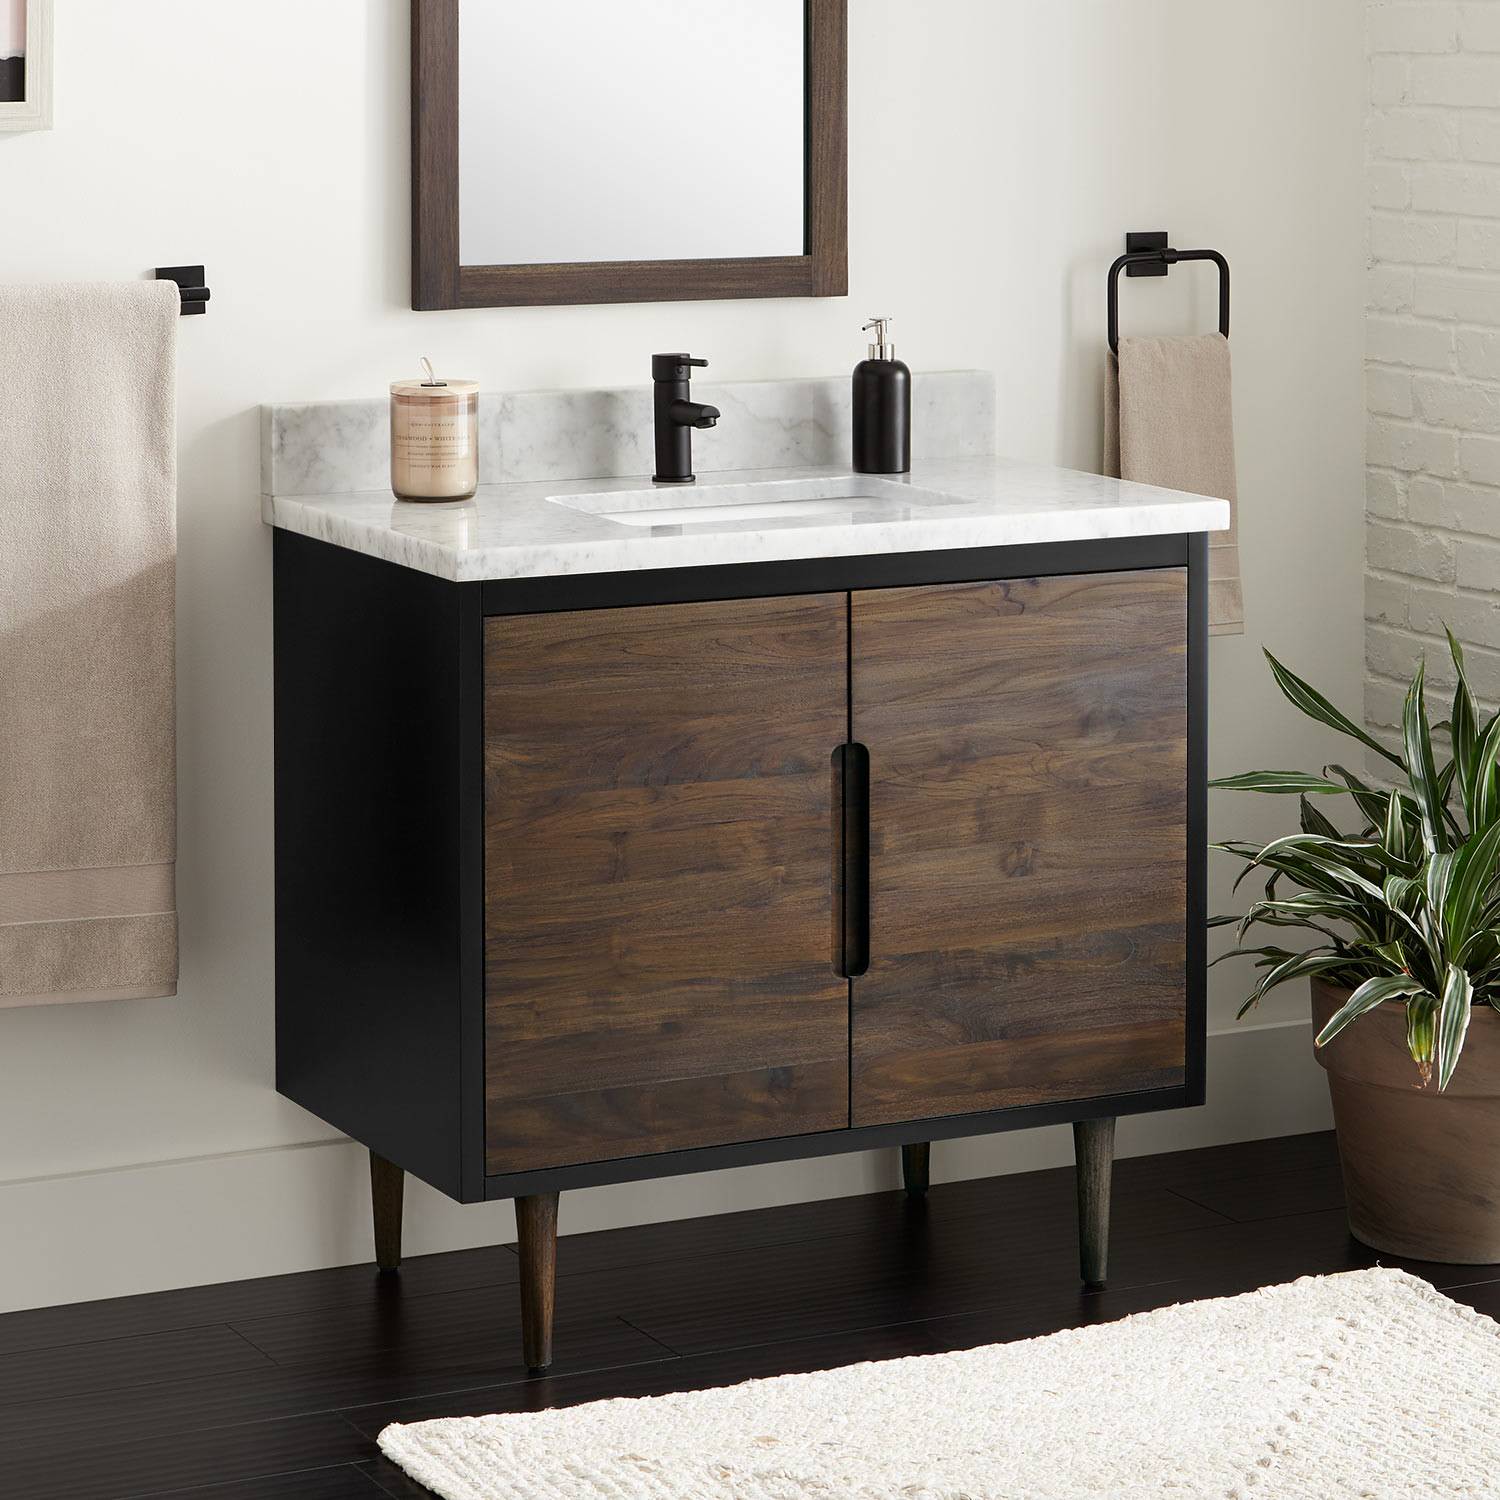 36 Bivins Walnut Black Teak Bathroom Vanity For Rectangular Undermount Sink Transitional Bathroom Cincinnati By Signature Hardware Houzz